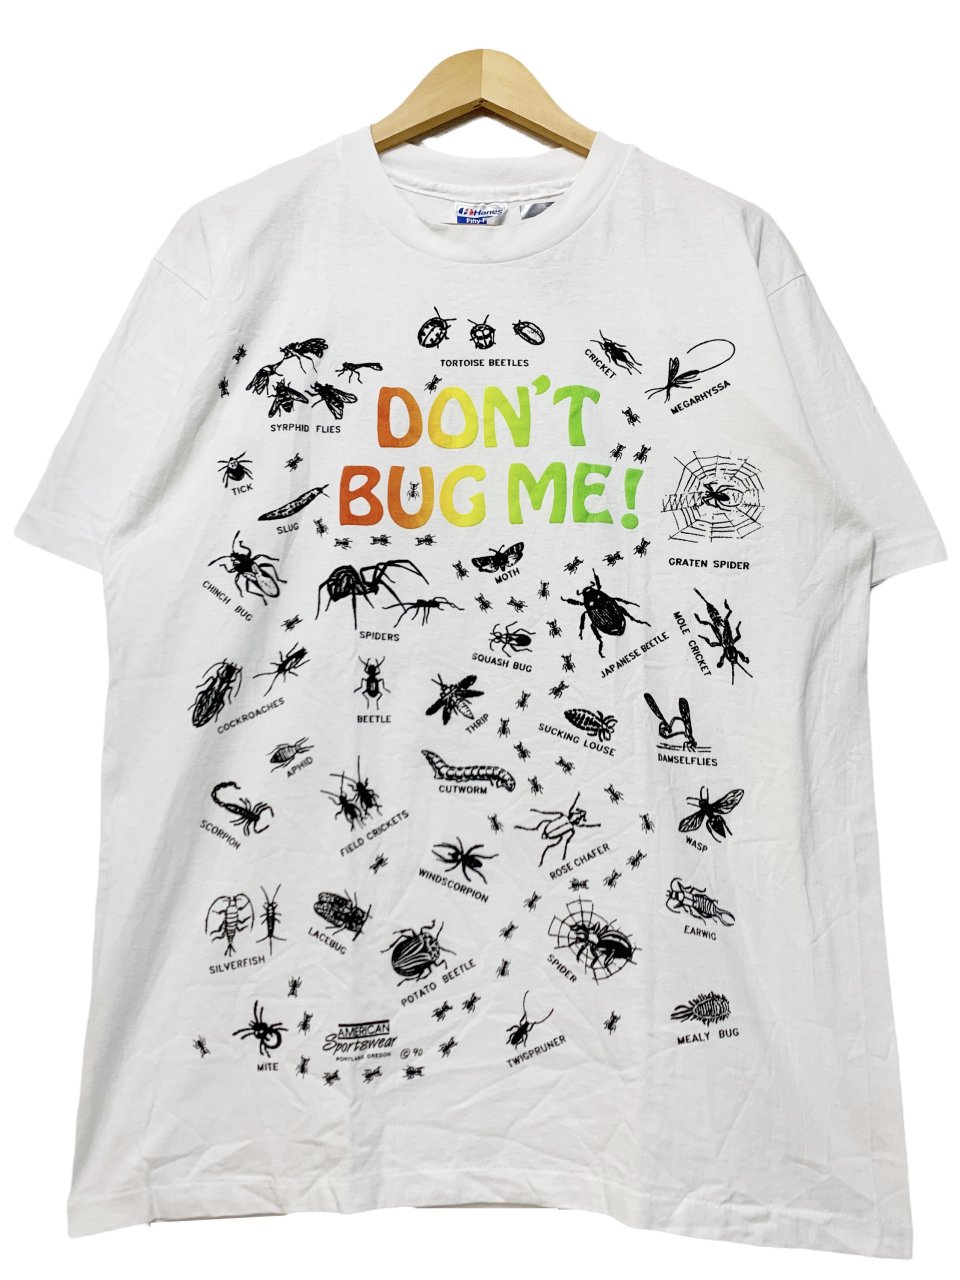 USA製 90年 Don't Bug Me! Print S/S Tee 白 L 80~90s 虫 昆虫 バグ 半袖 Tシャツ プリント Hanes  ヘインズ ホワイト 古着 - NEWJOKE ONLINE STORE